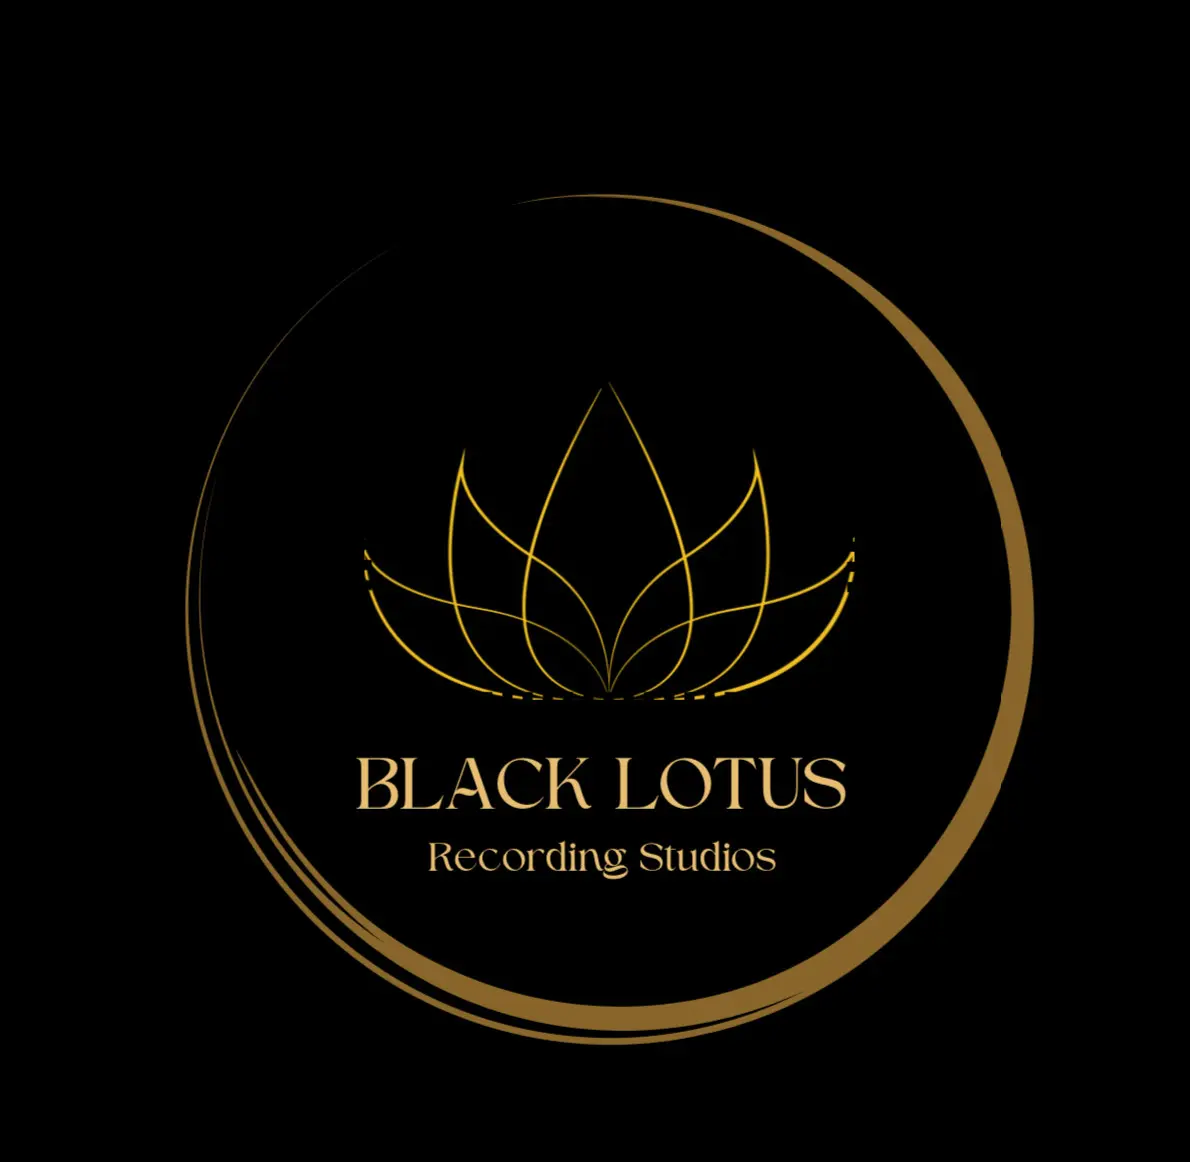 Black Lotus Recording Studios